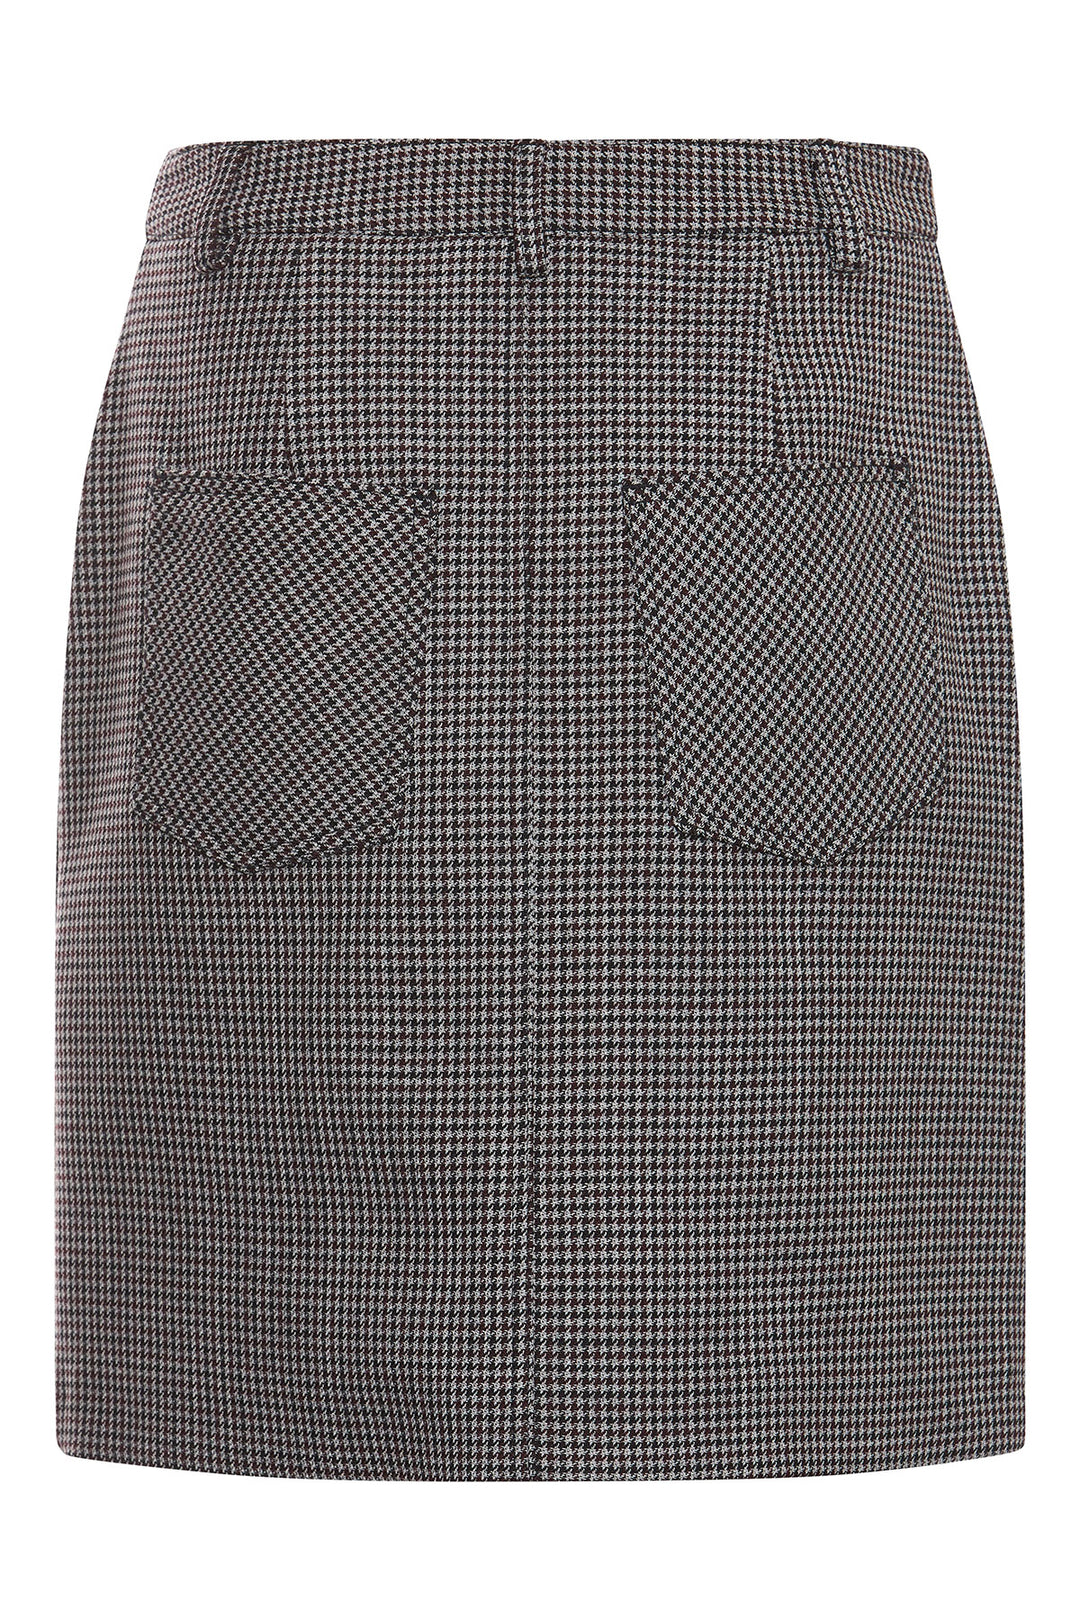 Heartmade Sica skirt HM SKIRTS 688 Grey check